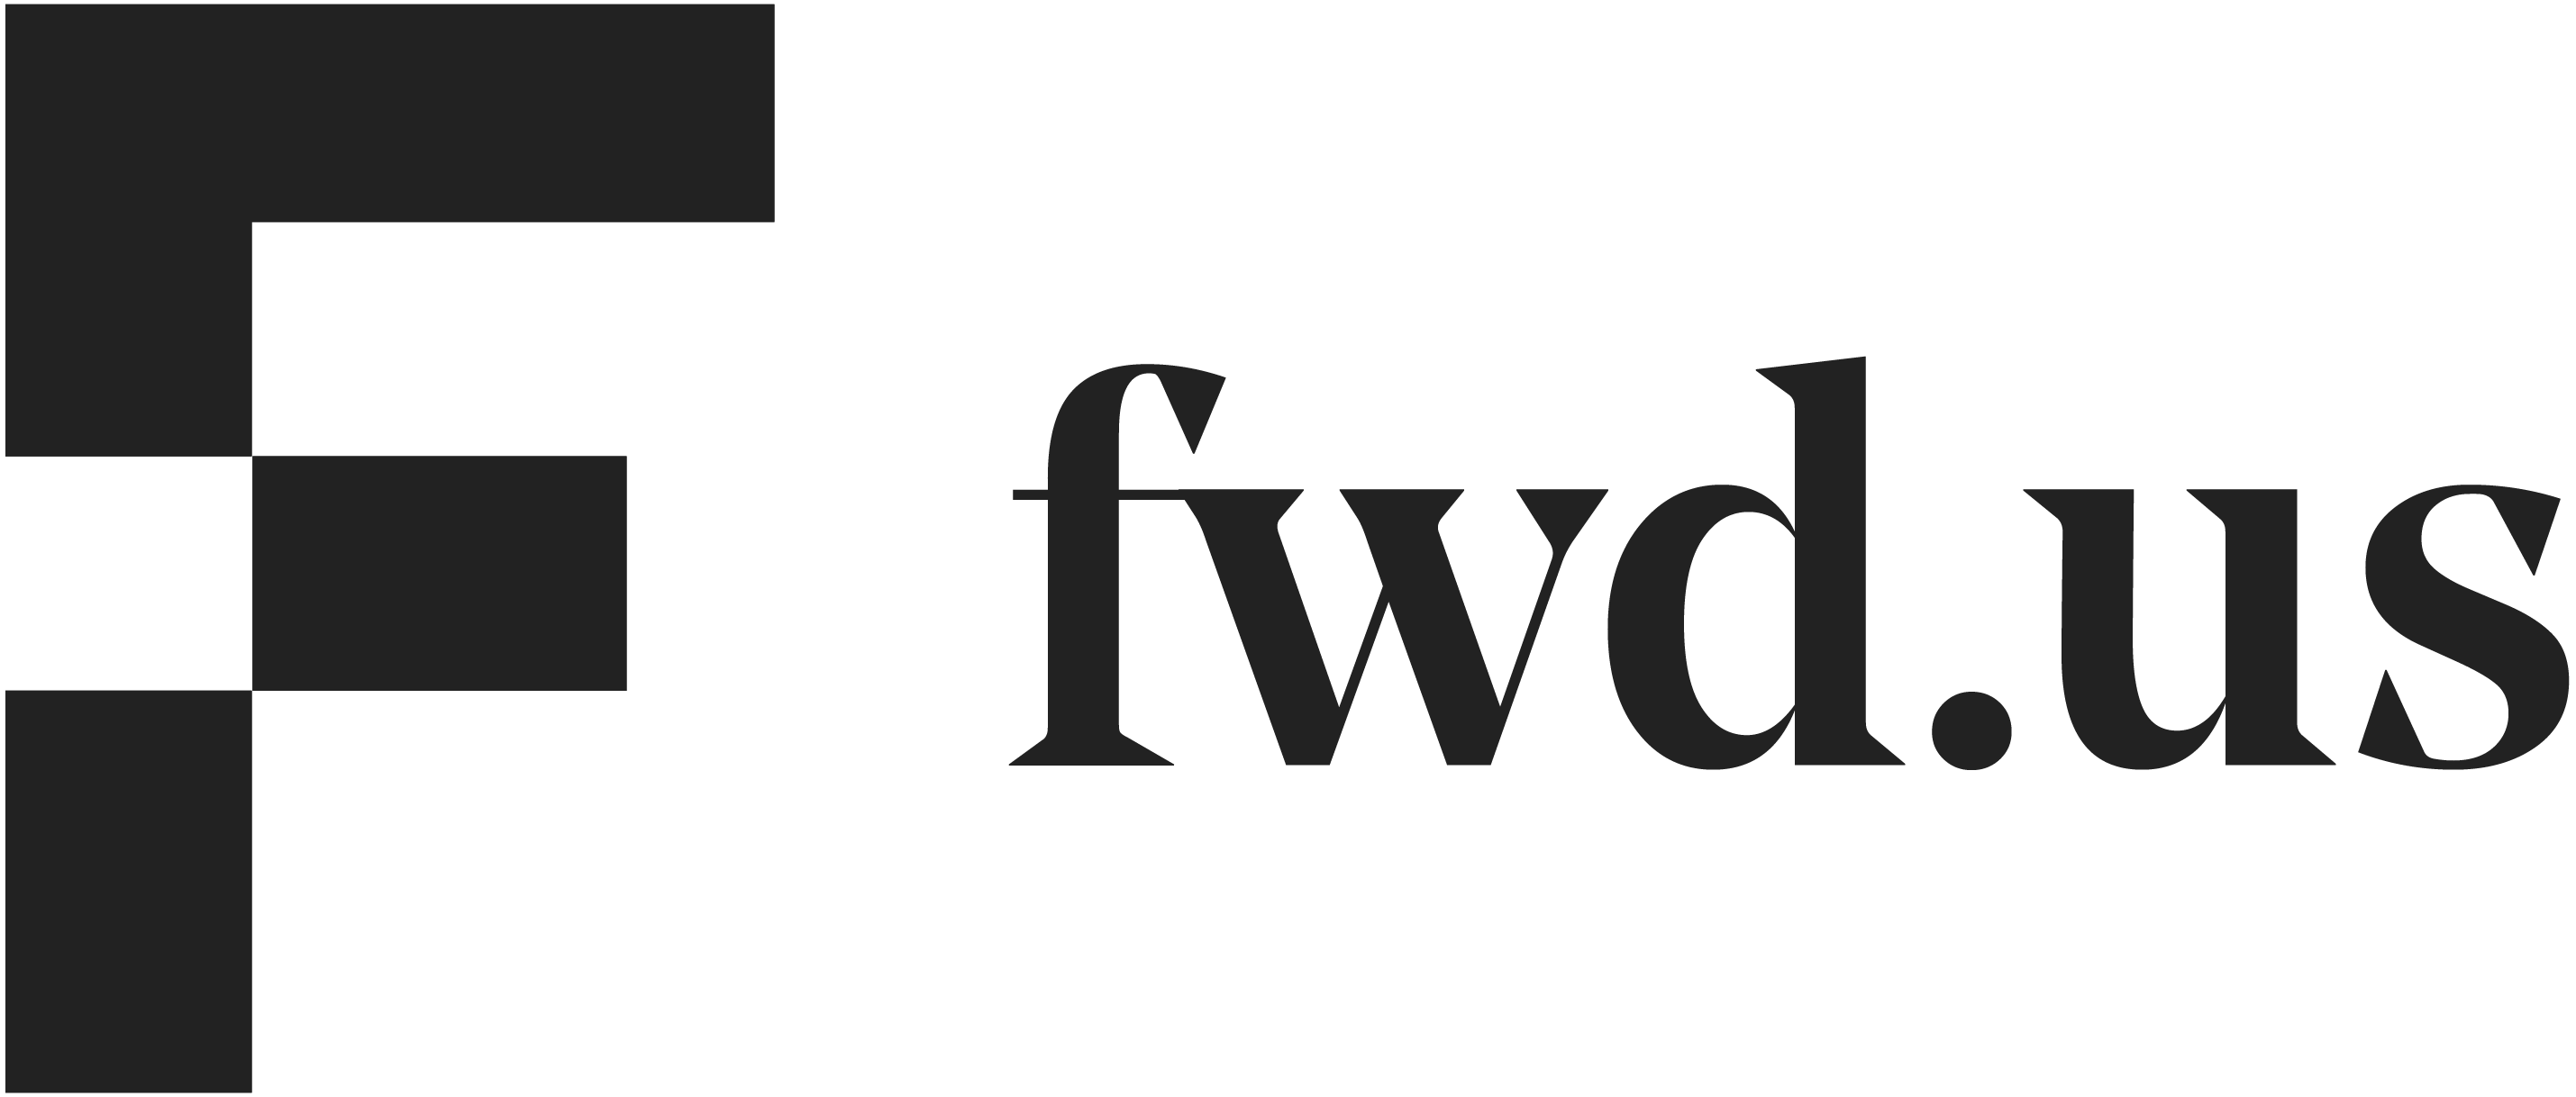 Fwd.us logo